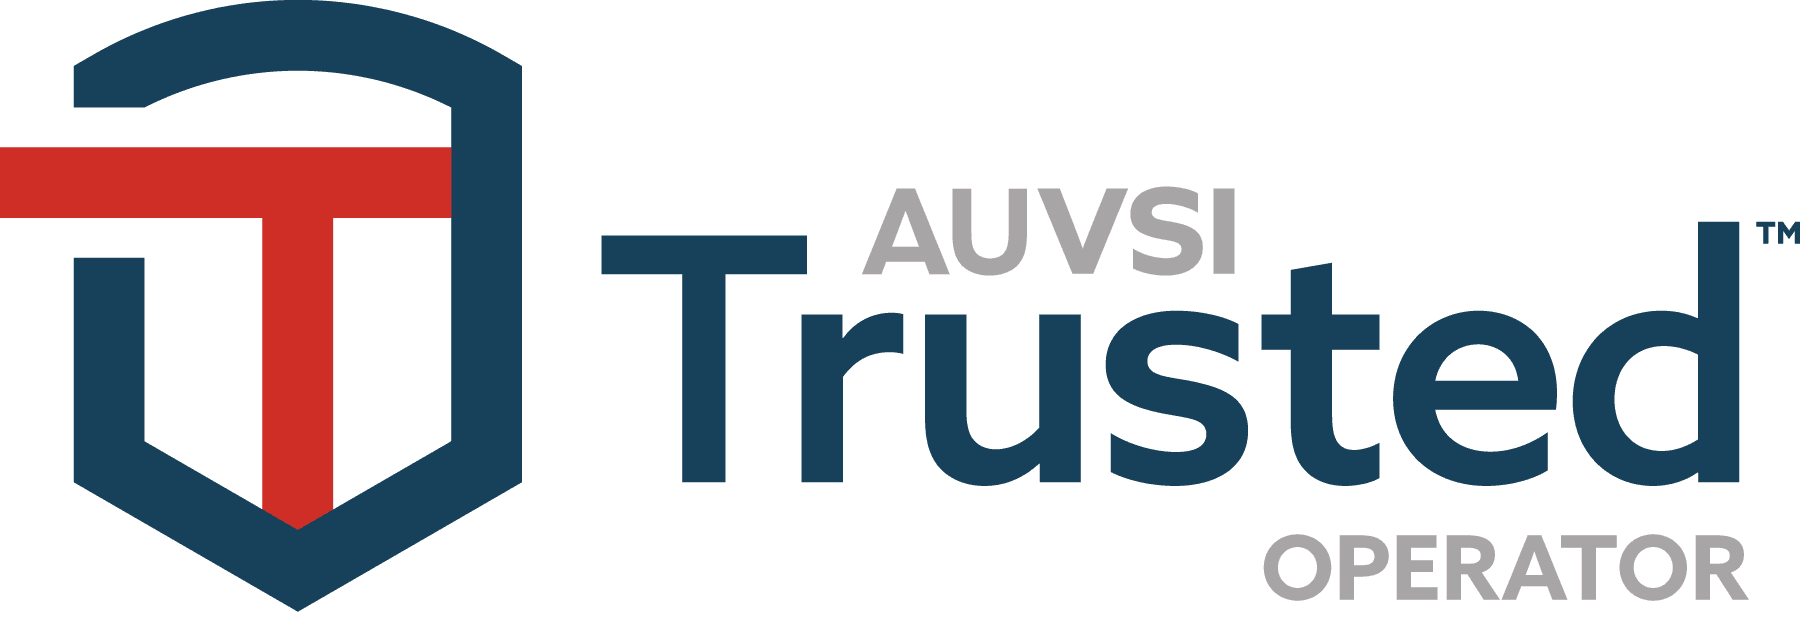 AUVSI Trusted Operator™